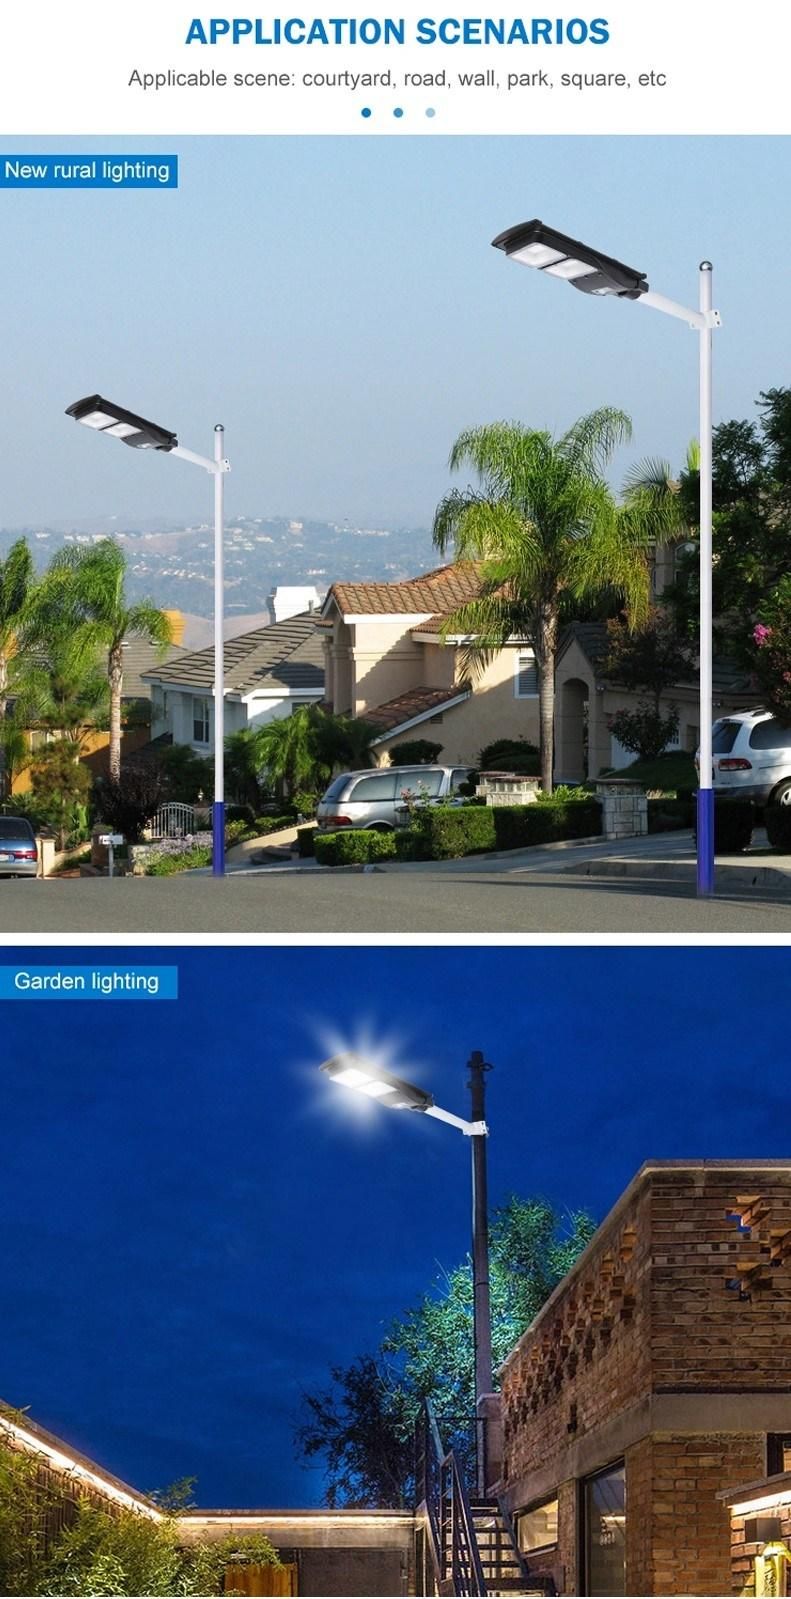 20W 40W 60W 80W ABS Cheap Price Solar Light, Sensor Street Lightings, Clasical Garden Lawn Bulbs Energy Saving Lamp, Outdoor Lighting Floodlight Power System